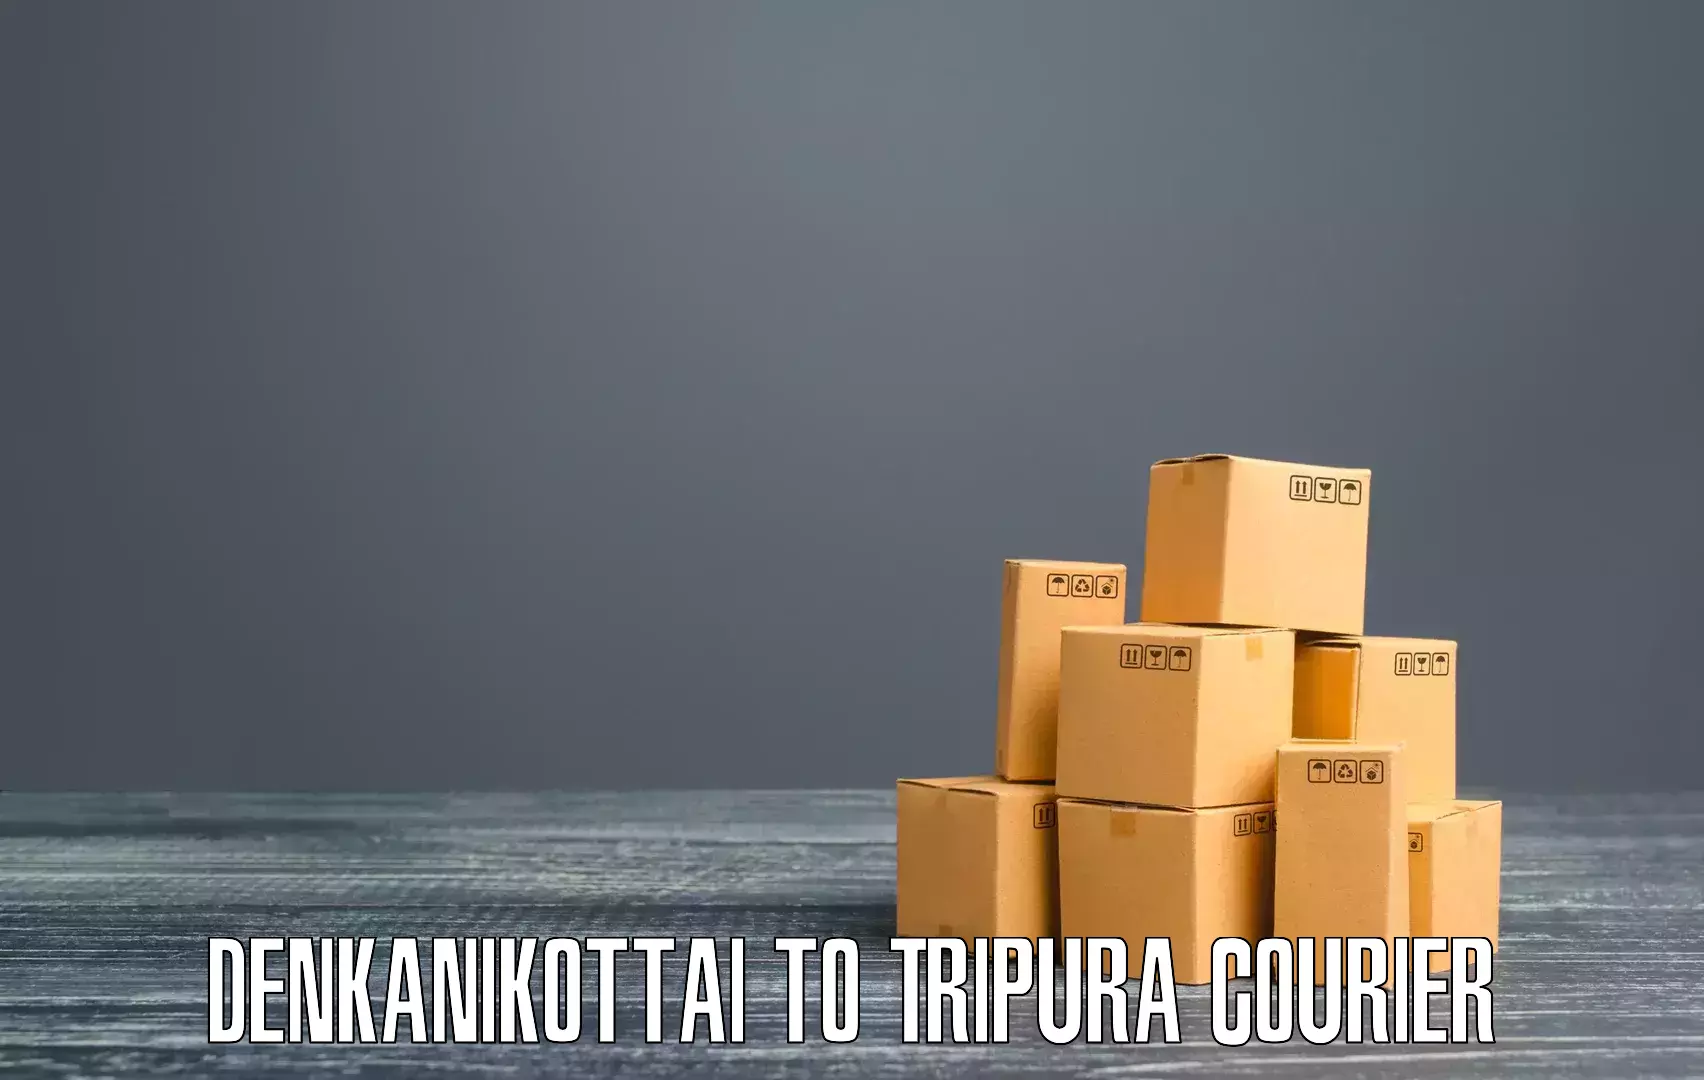 Business delivery service Denkanikottai to Tripura